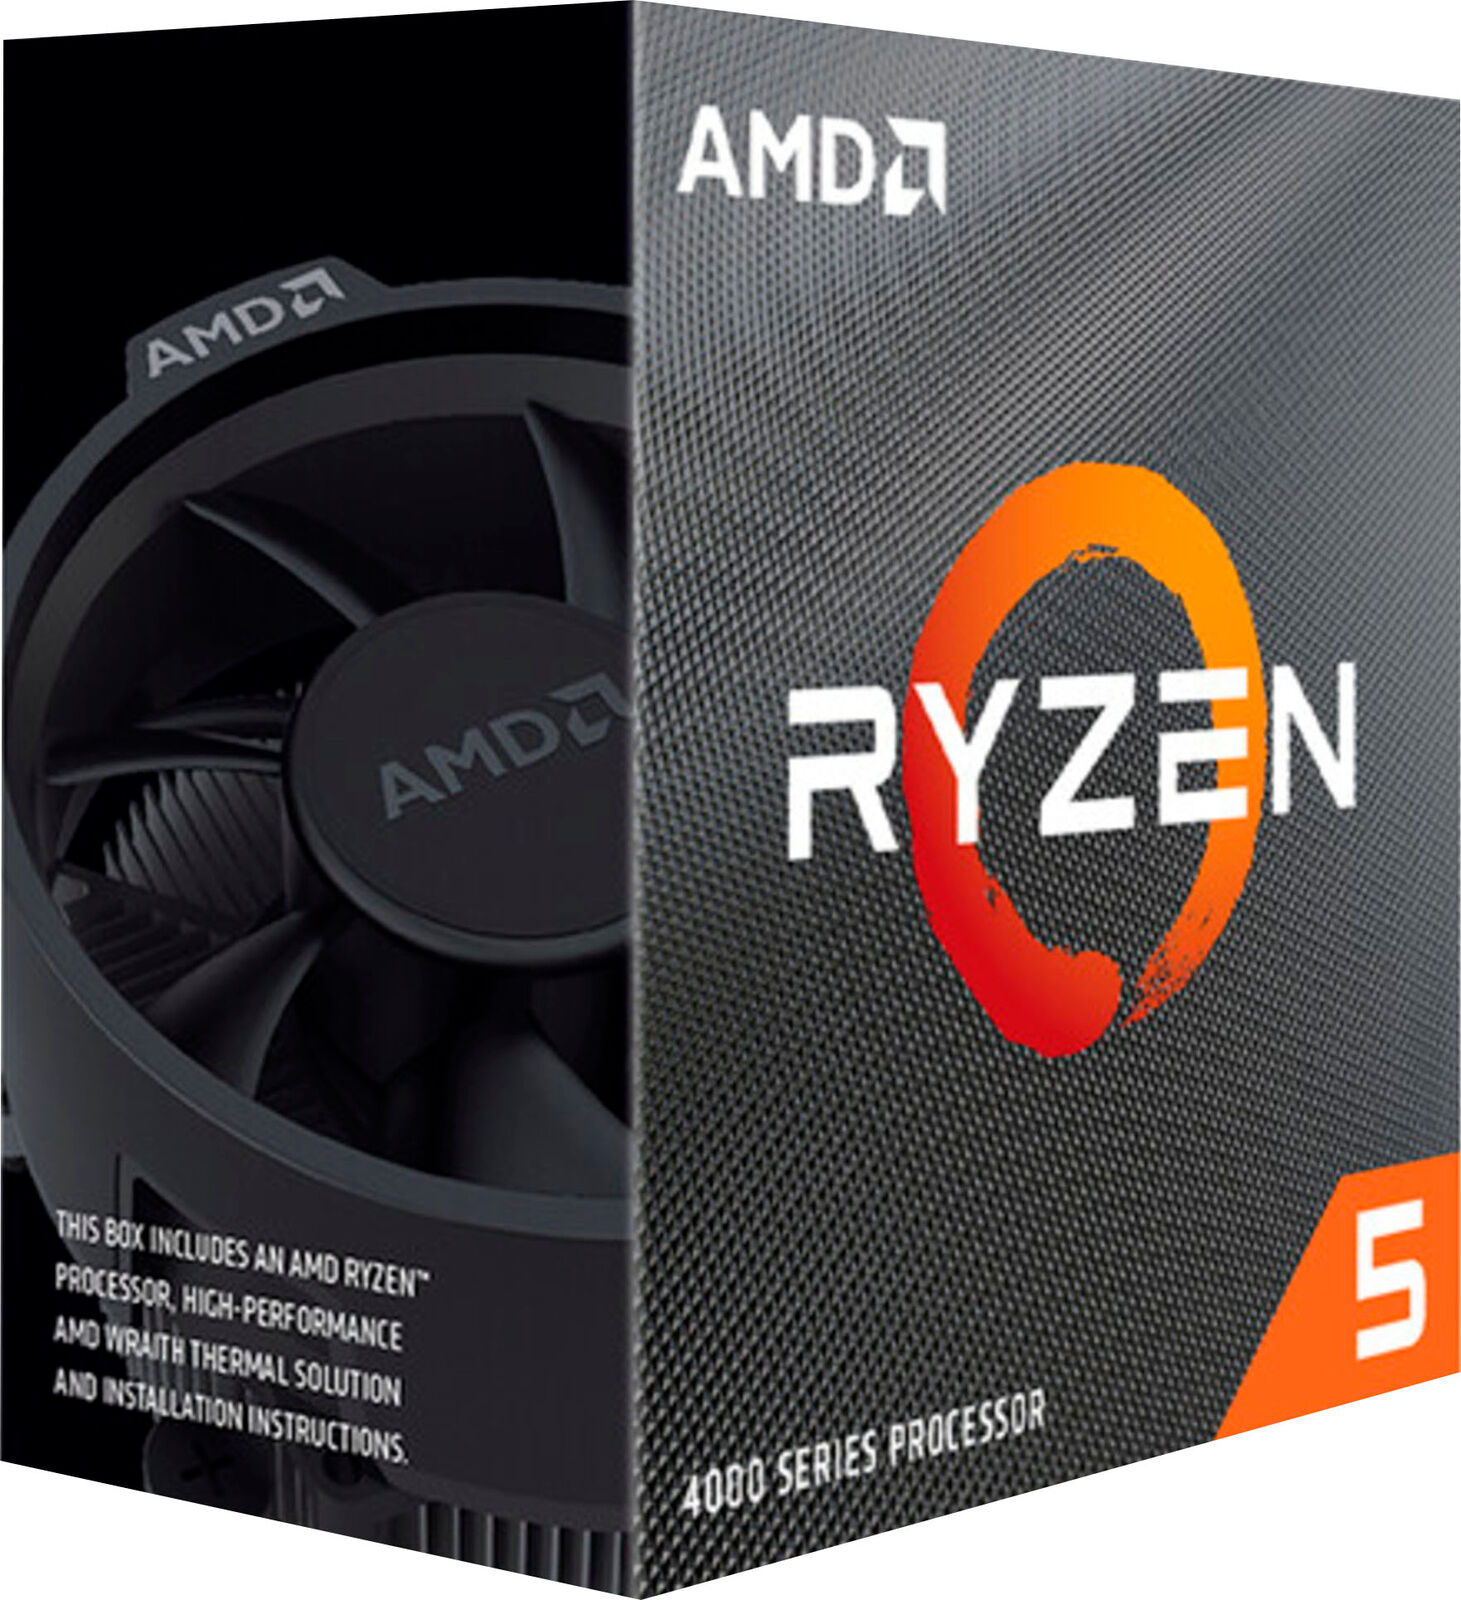 AMD - Ryzen 5 4500 3.6 GHz Six-Core AM4 Processor - Black